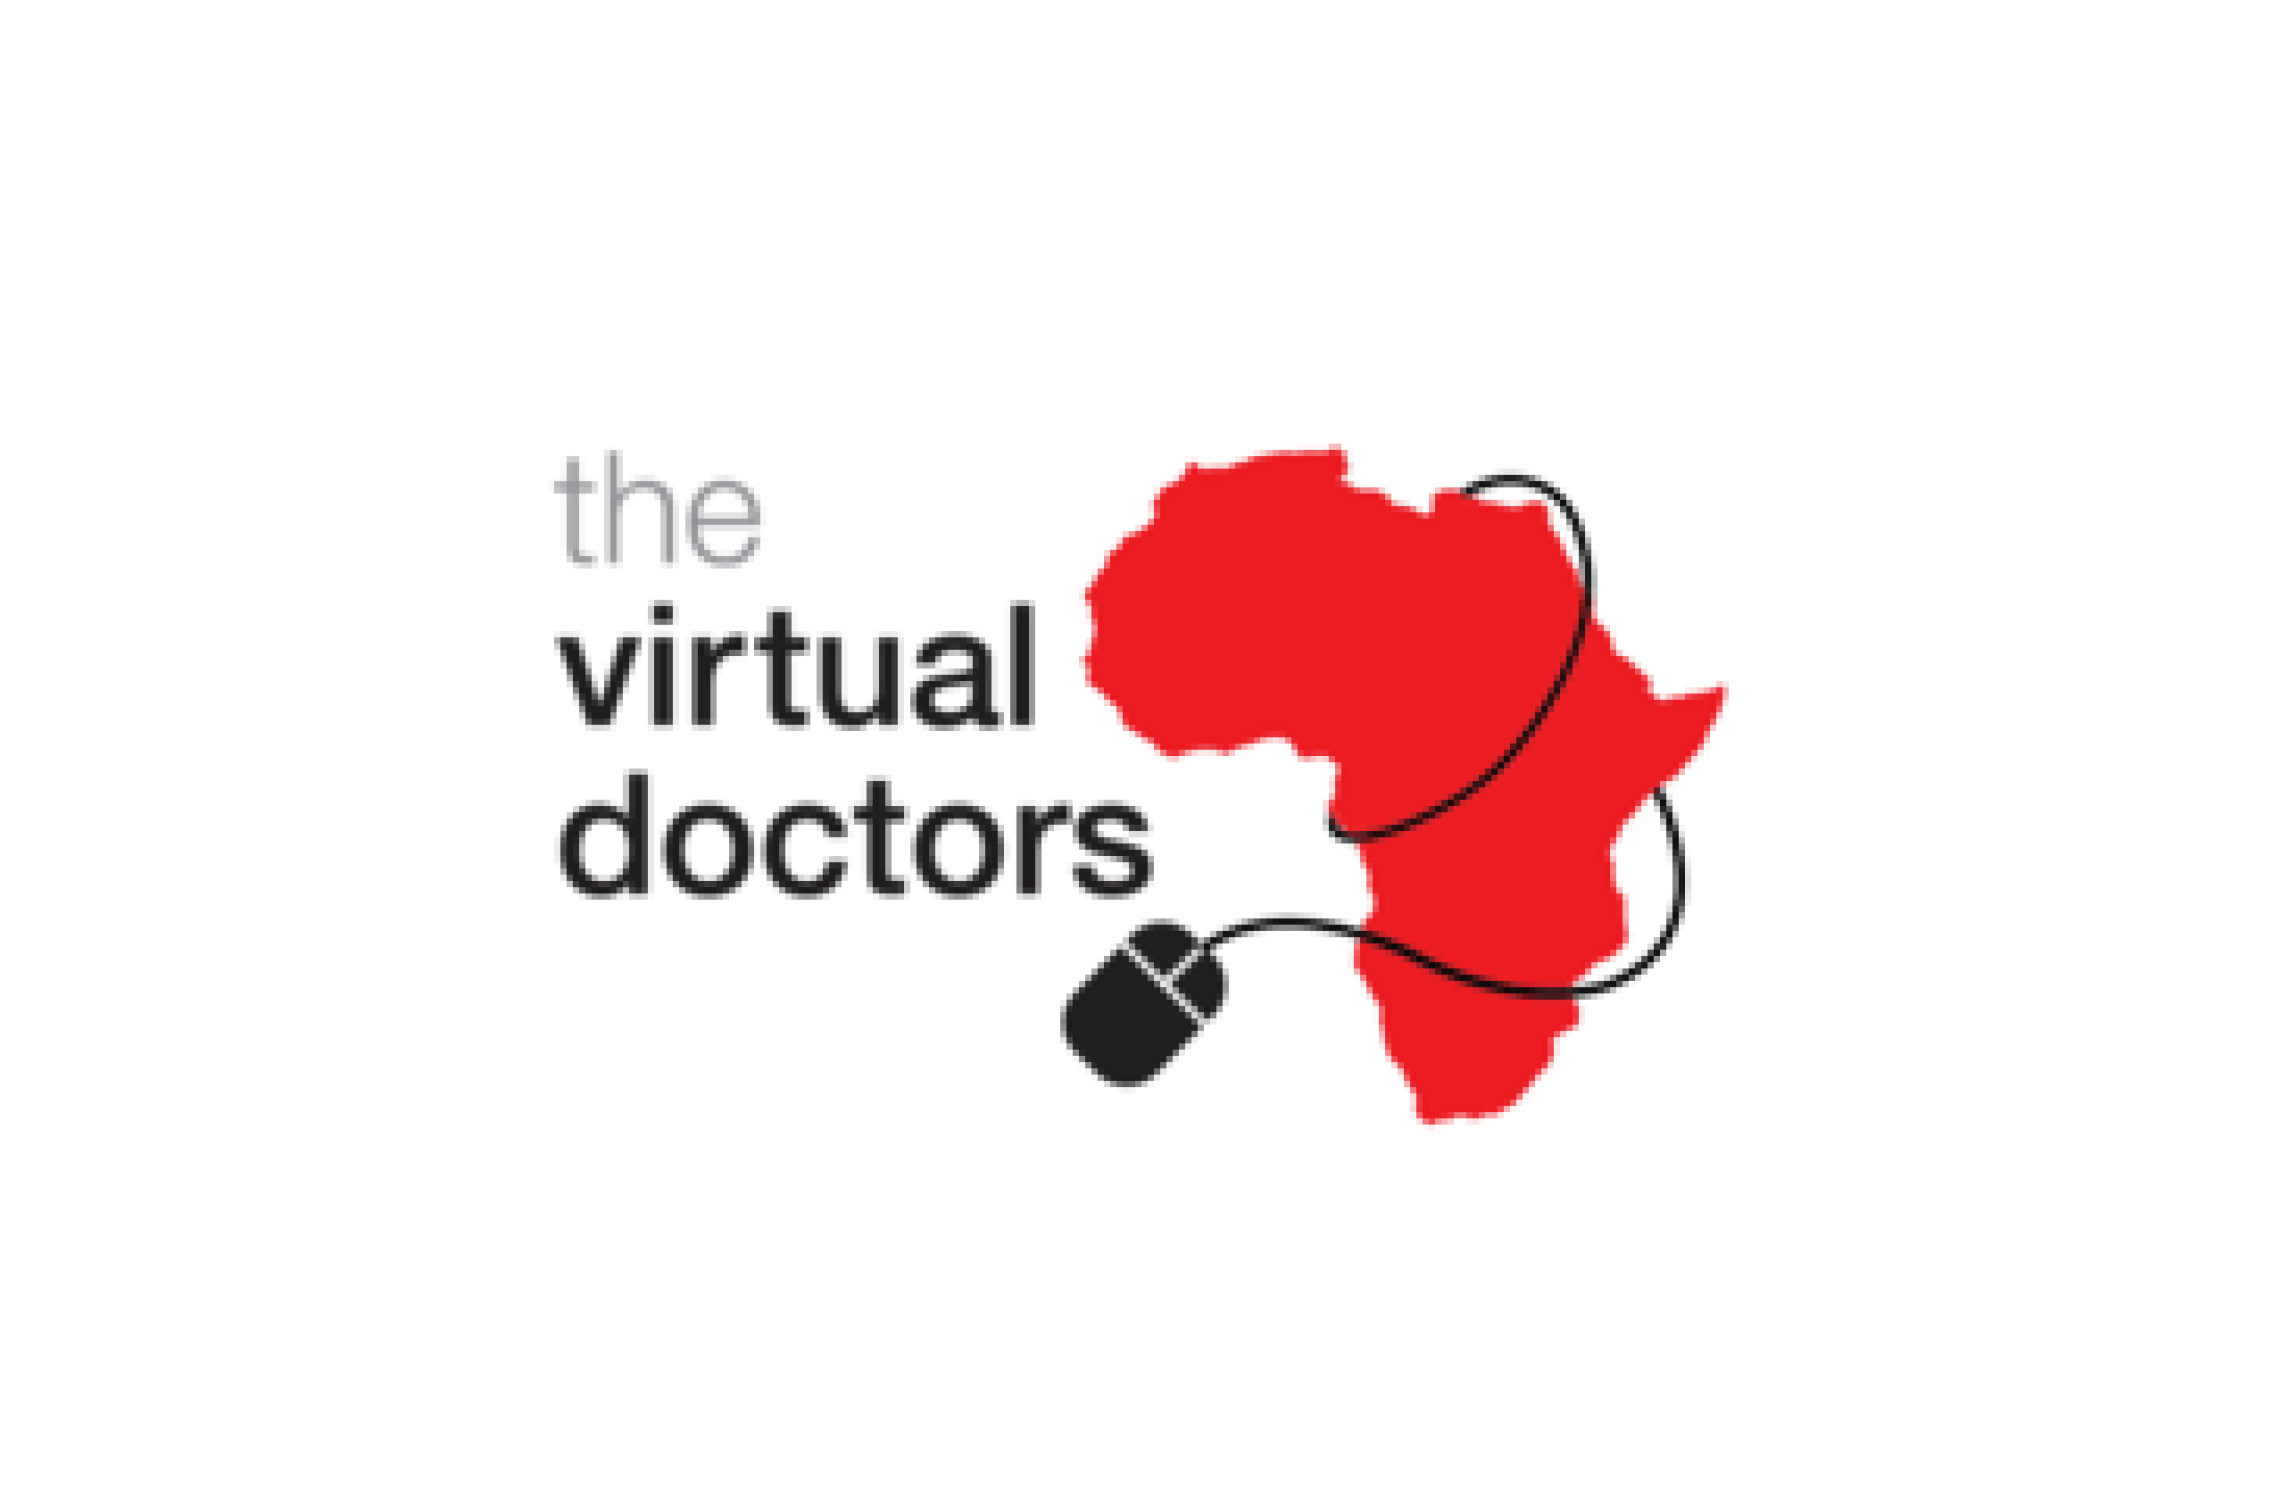 the virtual doctors logo